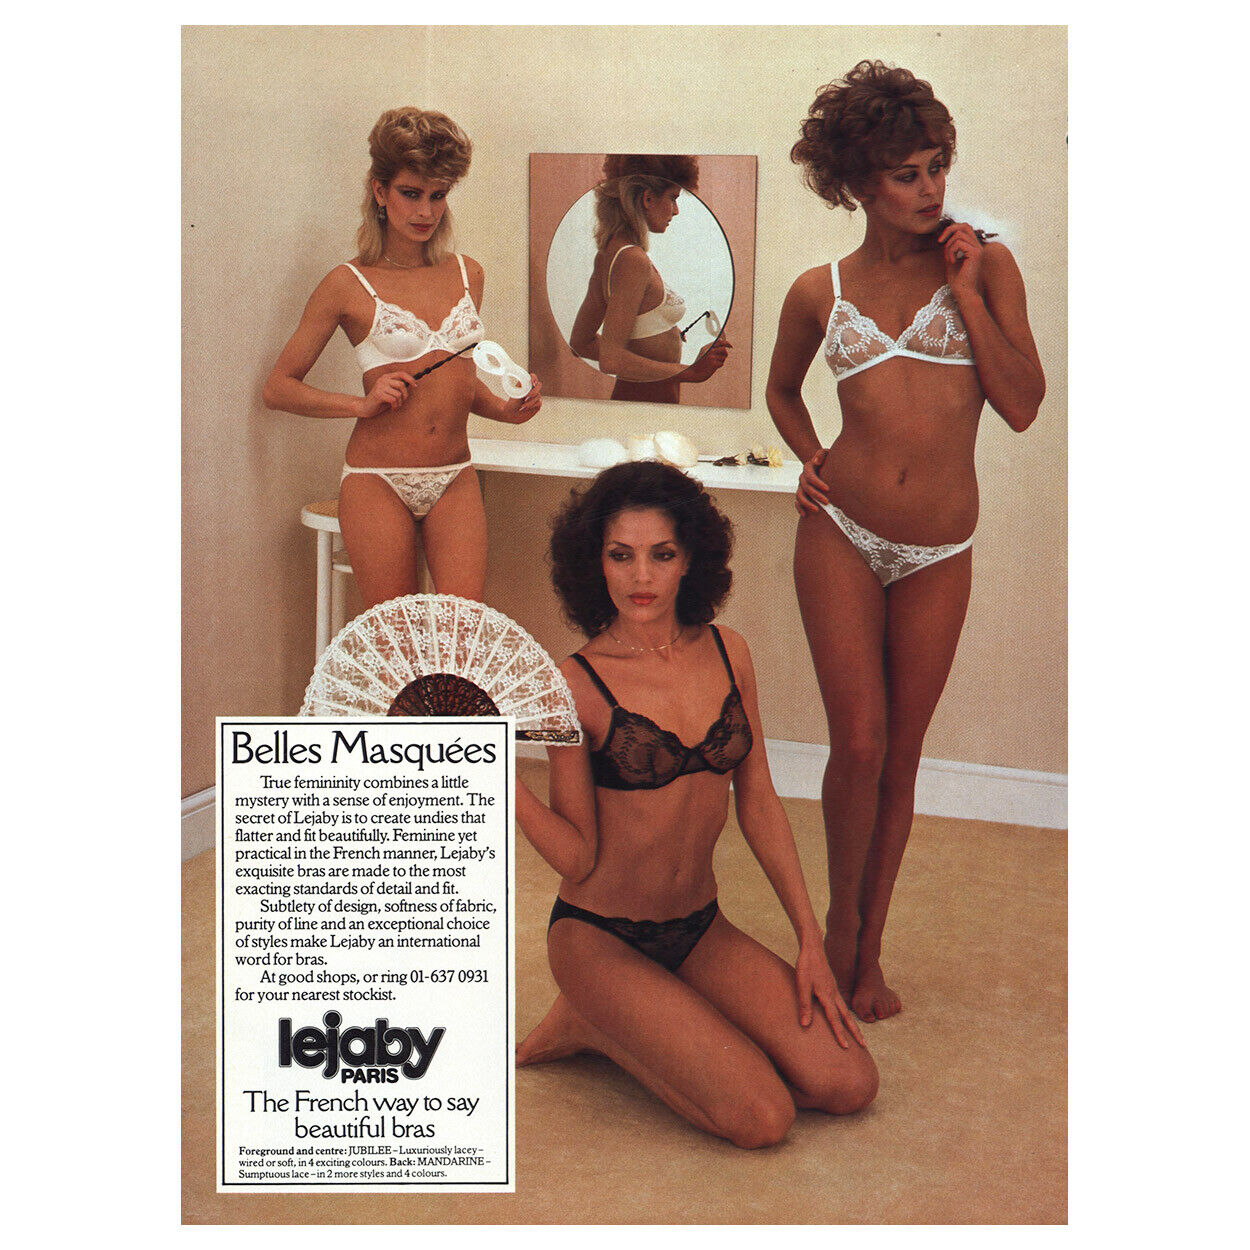 1983 Lejaby Paris: Belles Masquees Vintage Print Ad